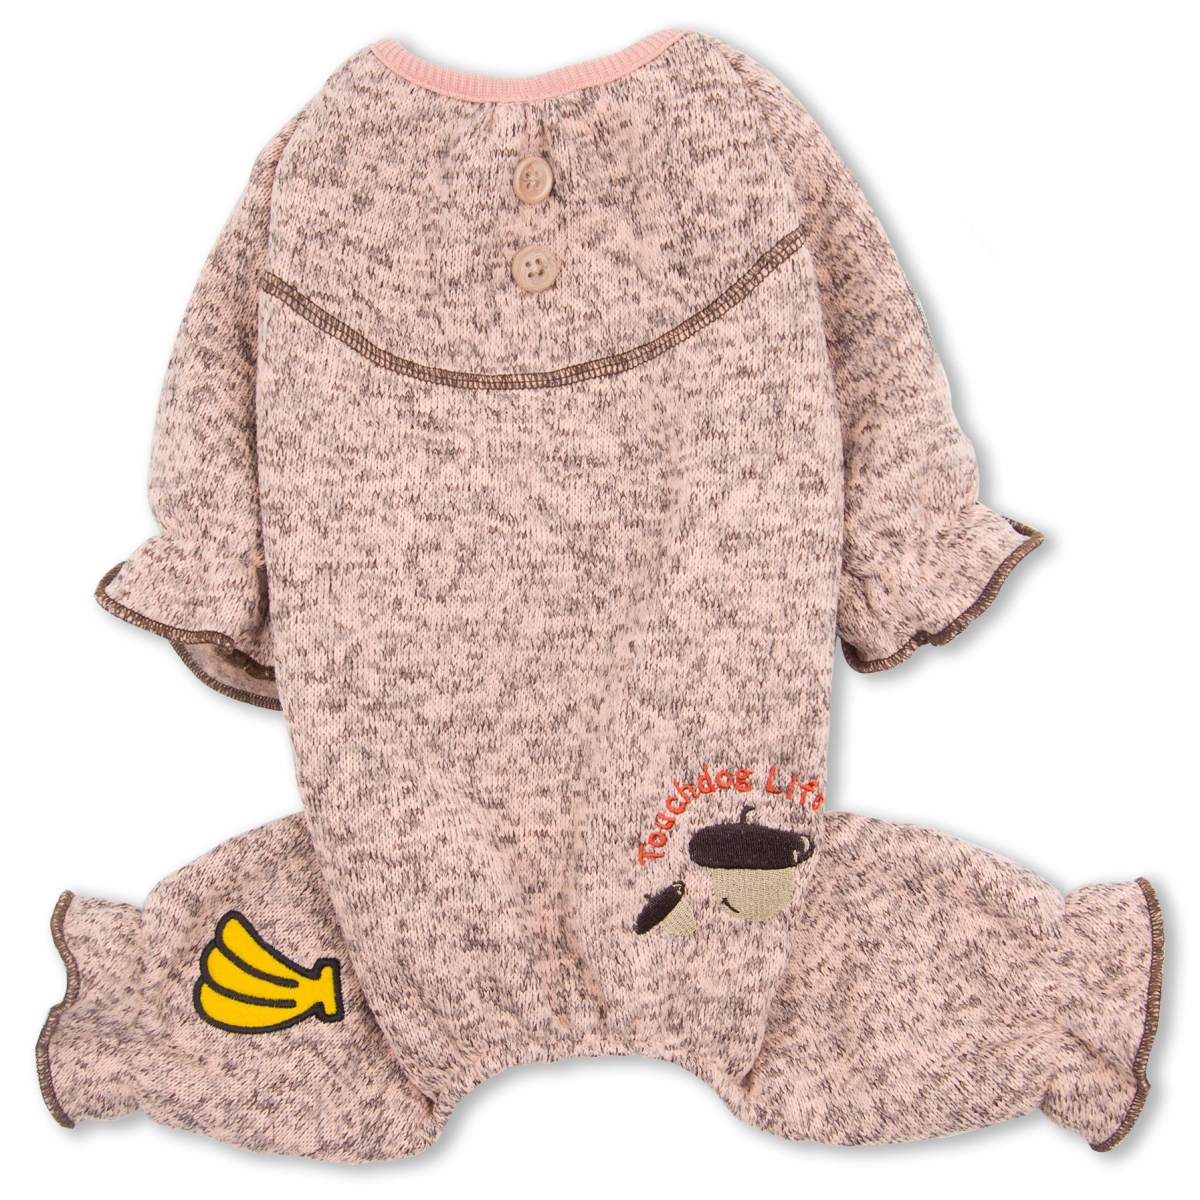 Pj3pksm Bark-zz Designer Full Body Thermal Pet Jumpsuit Pajamas , Pink - Small